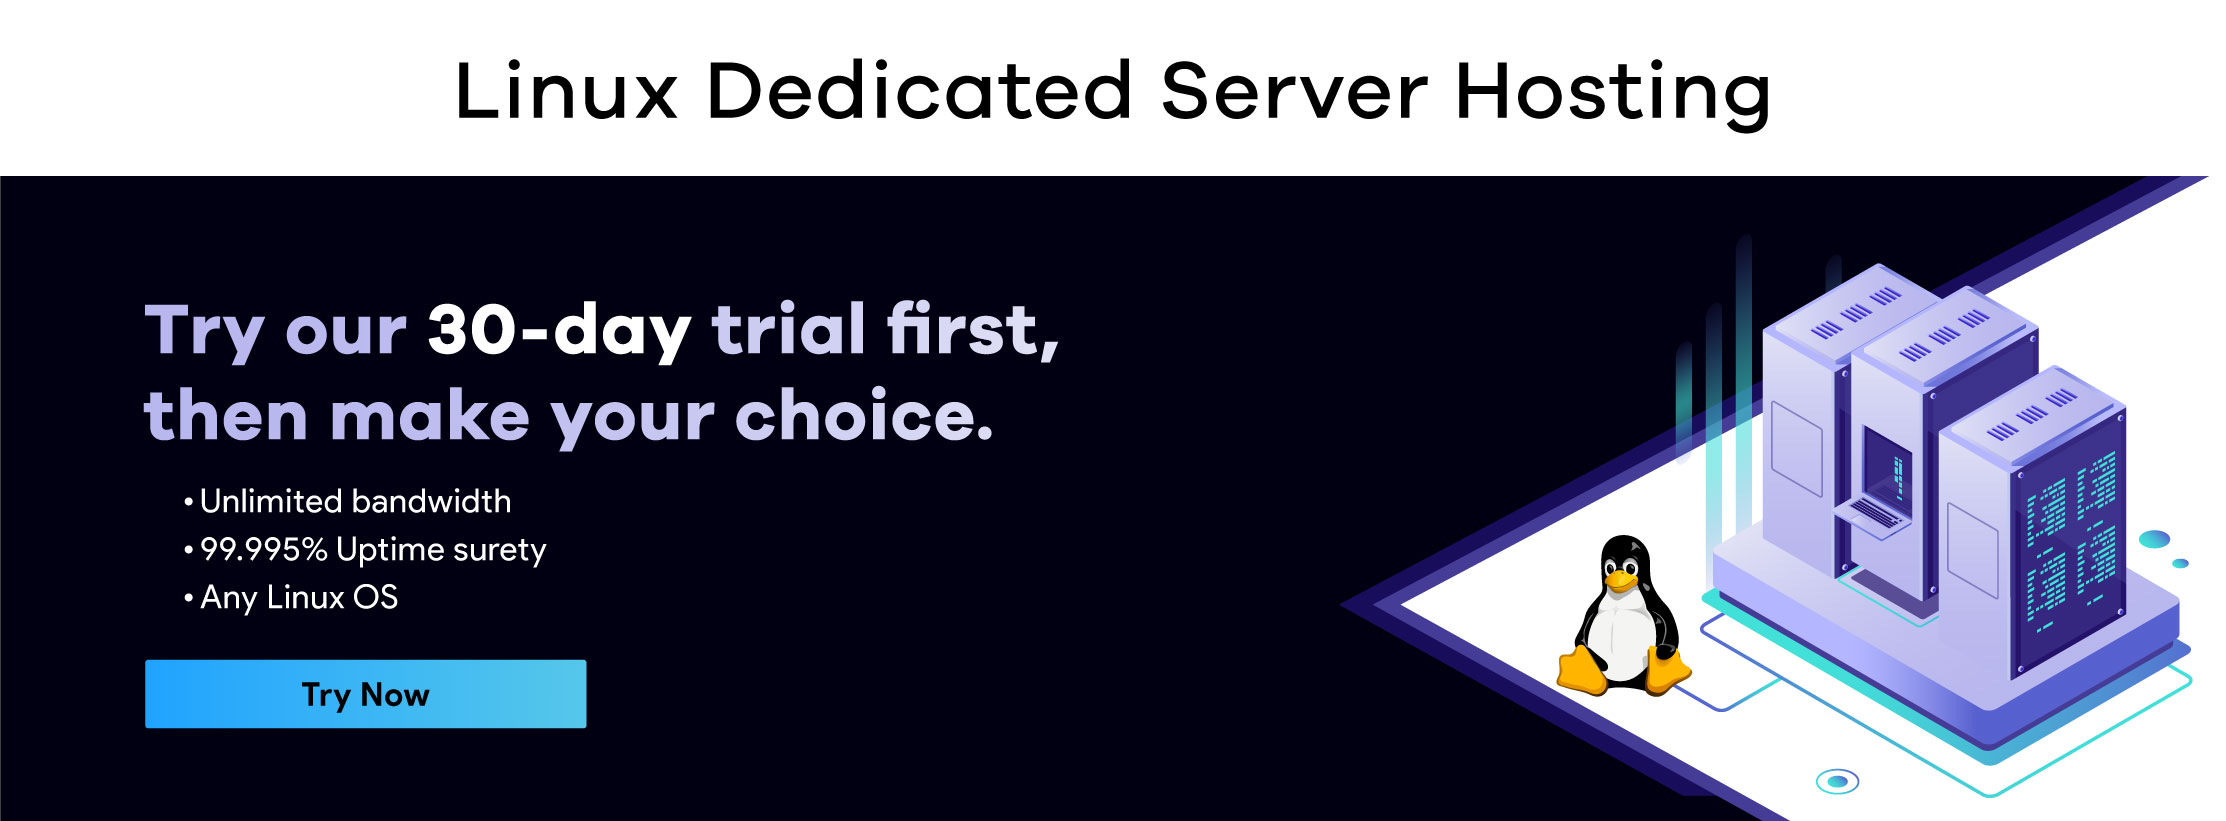 Linux-Dedicated-Server-Hosting